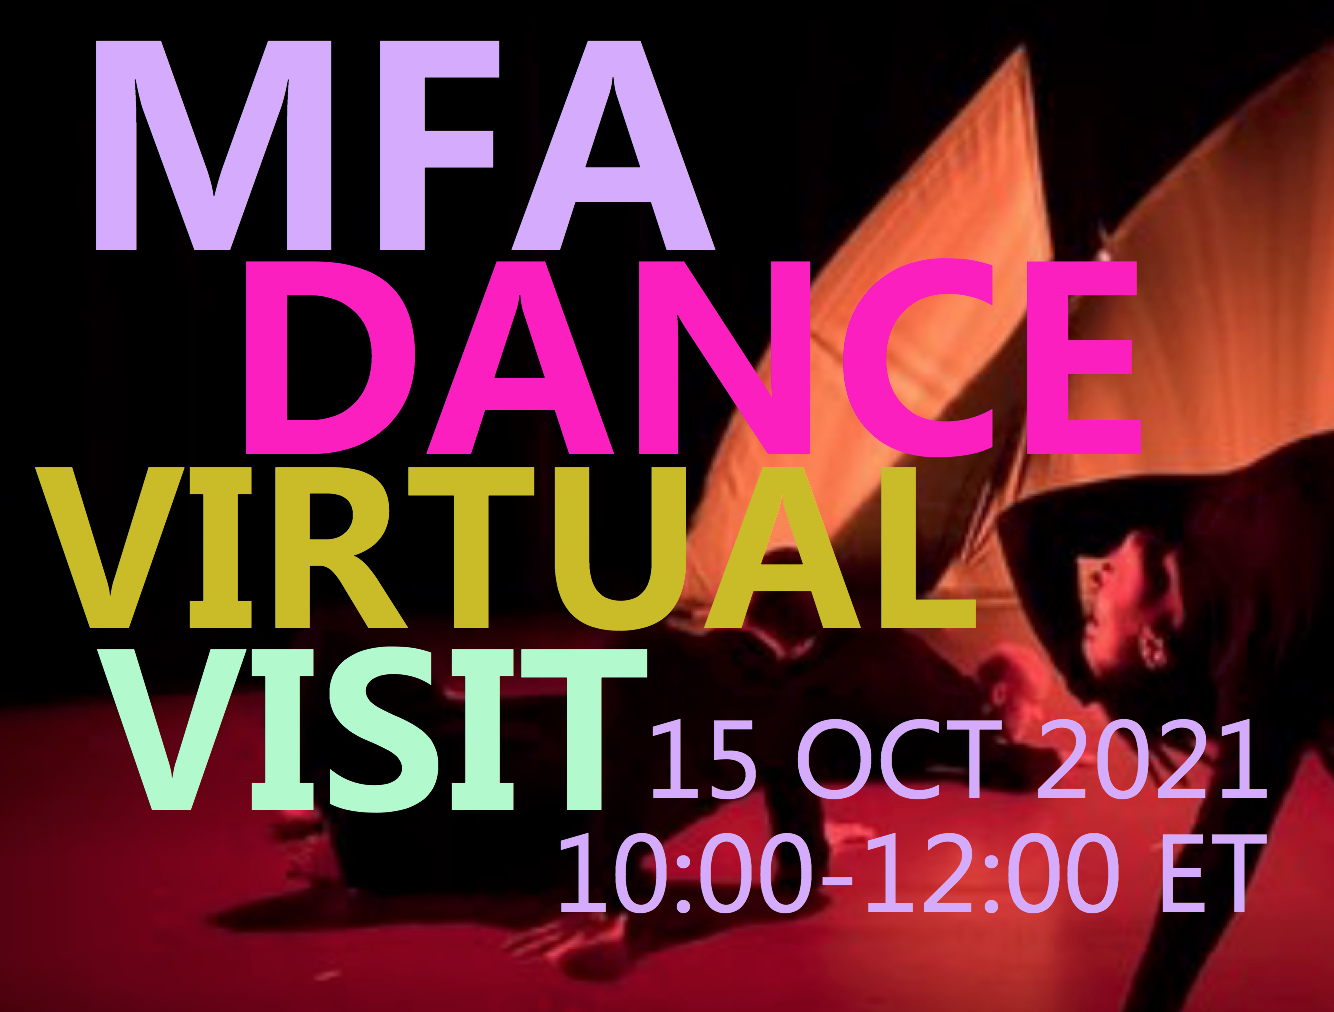 MFA dance virtual visit 2021